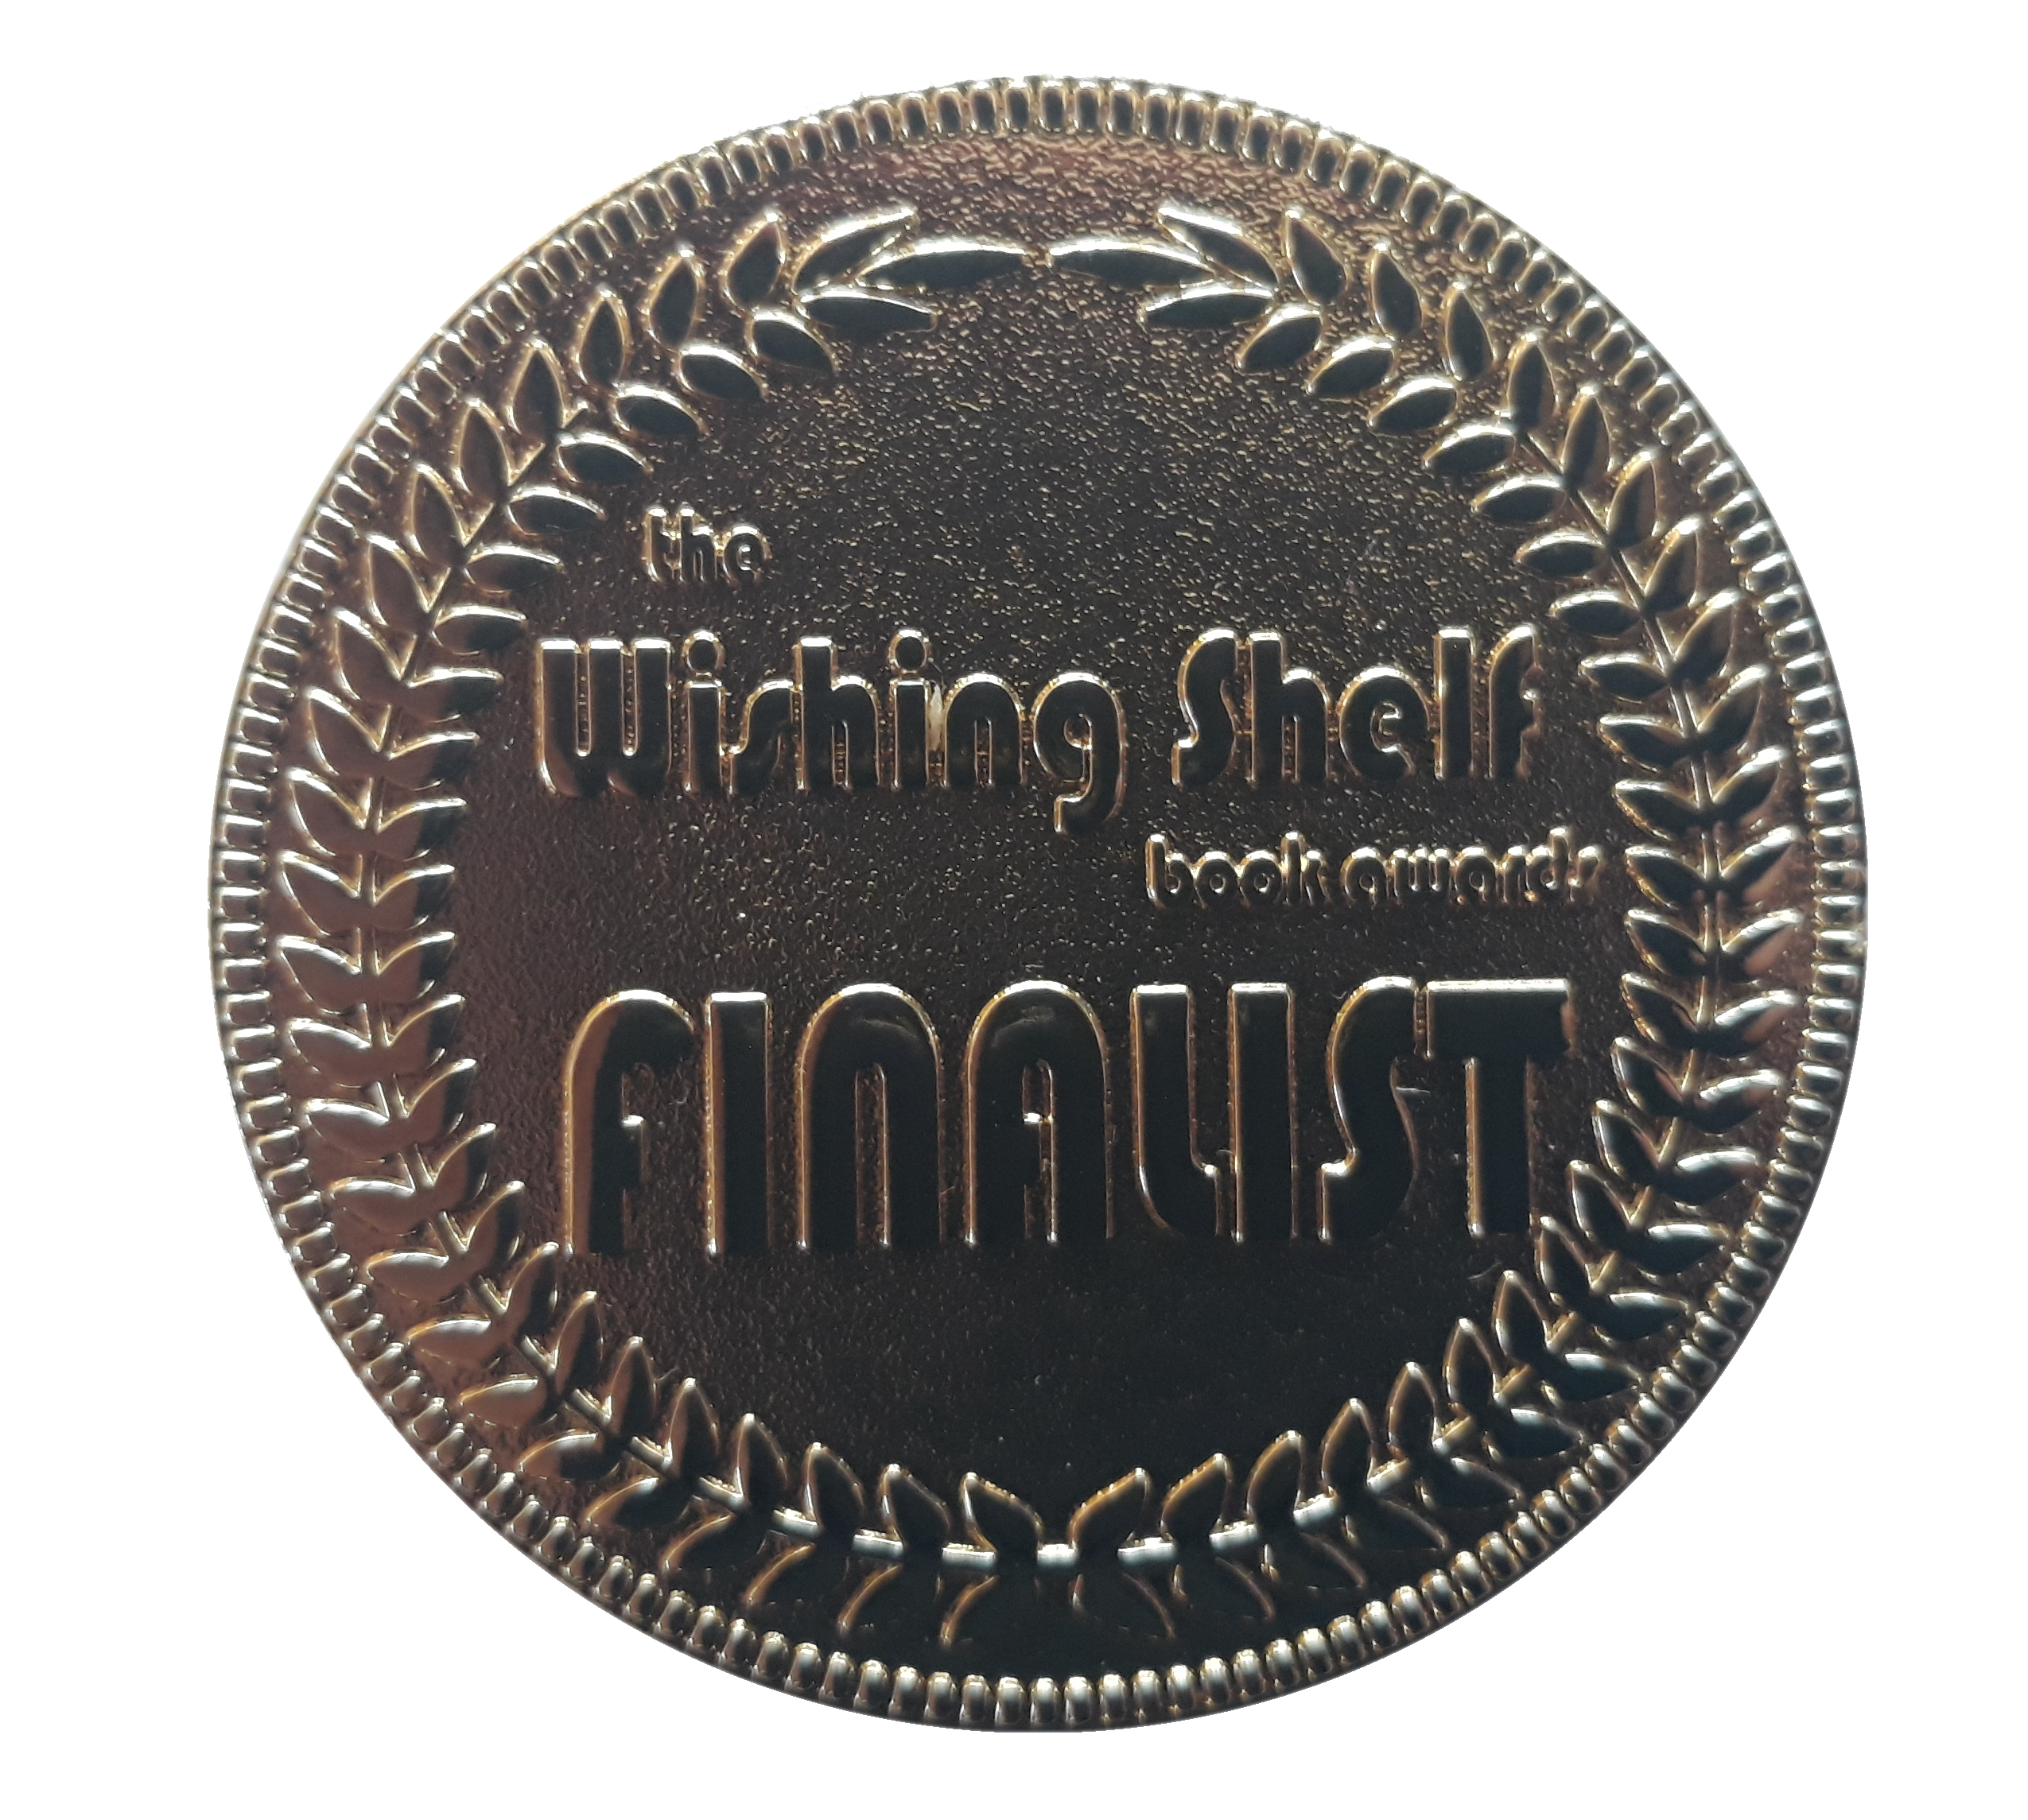 2021 The Wishing Shelf Best Book Cover Award Award - Finalist